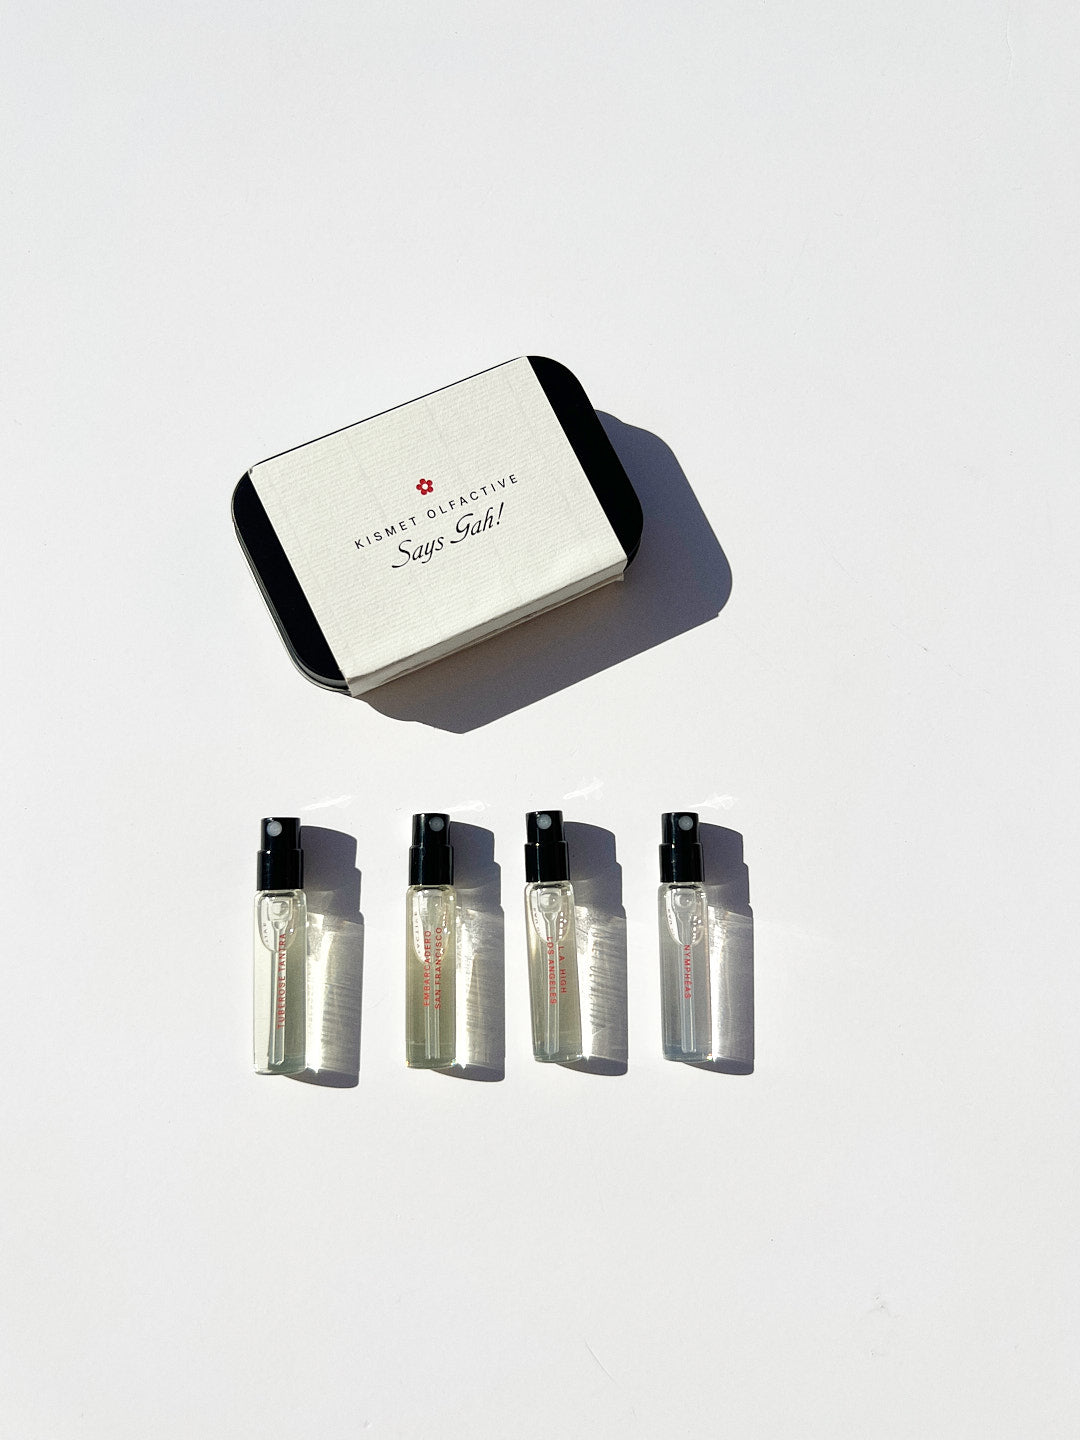 My sample set review of Kismet Olfactive fragrances. I have been